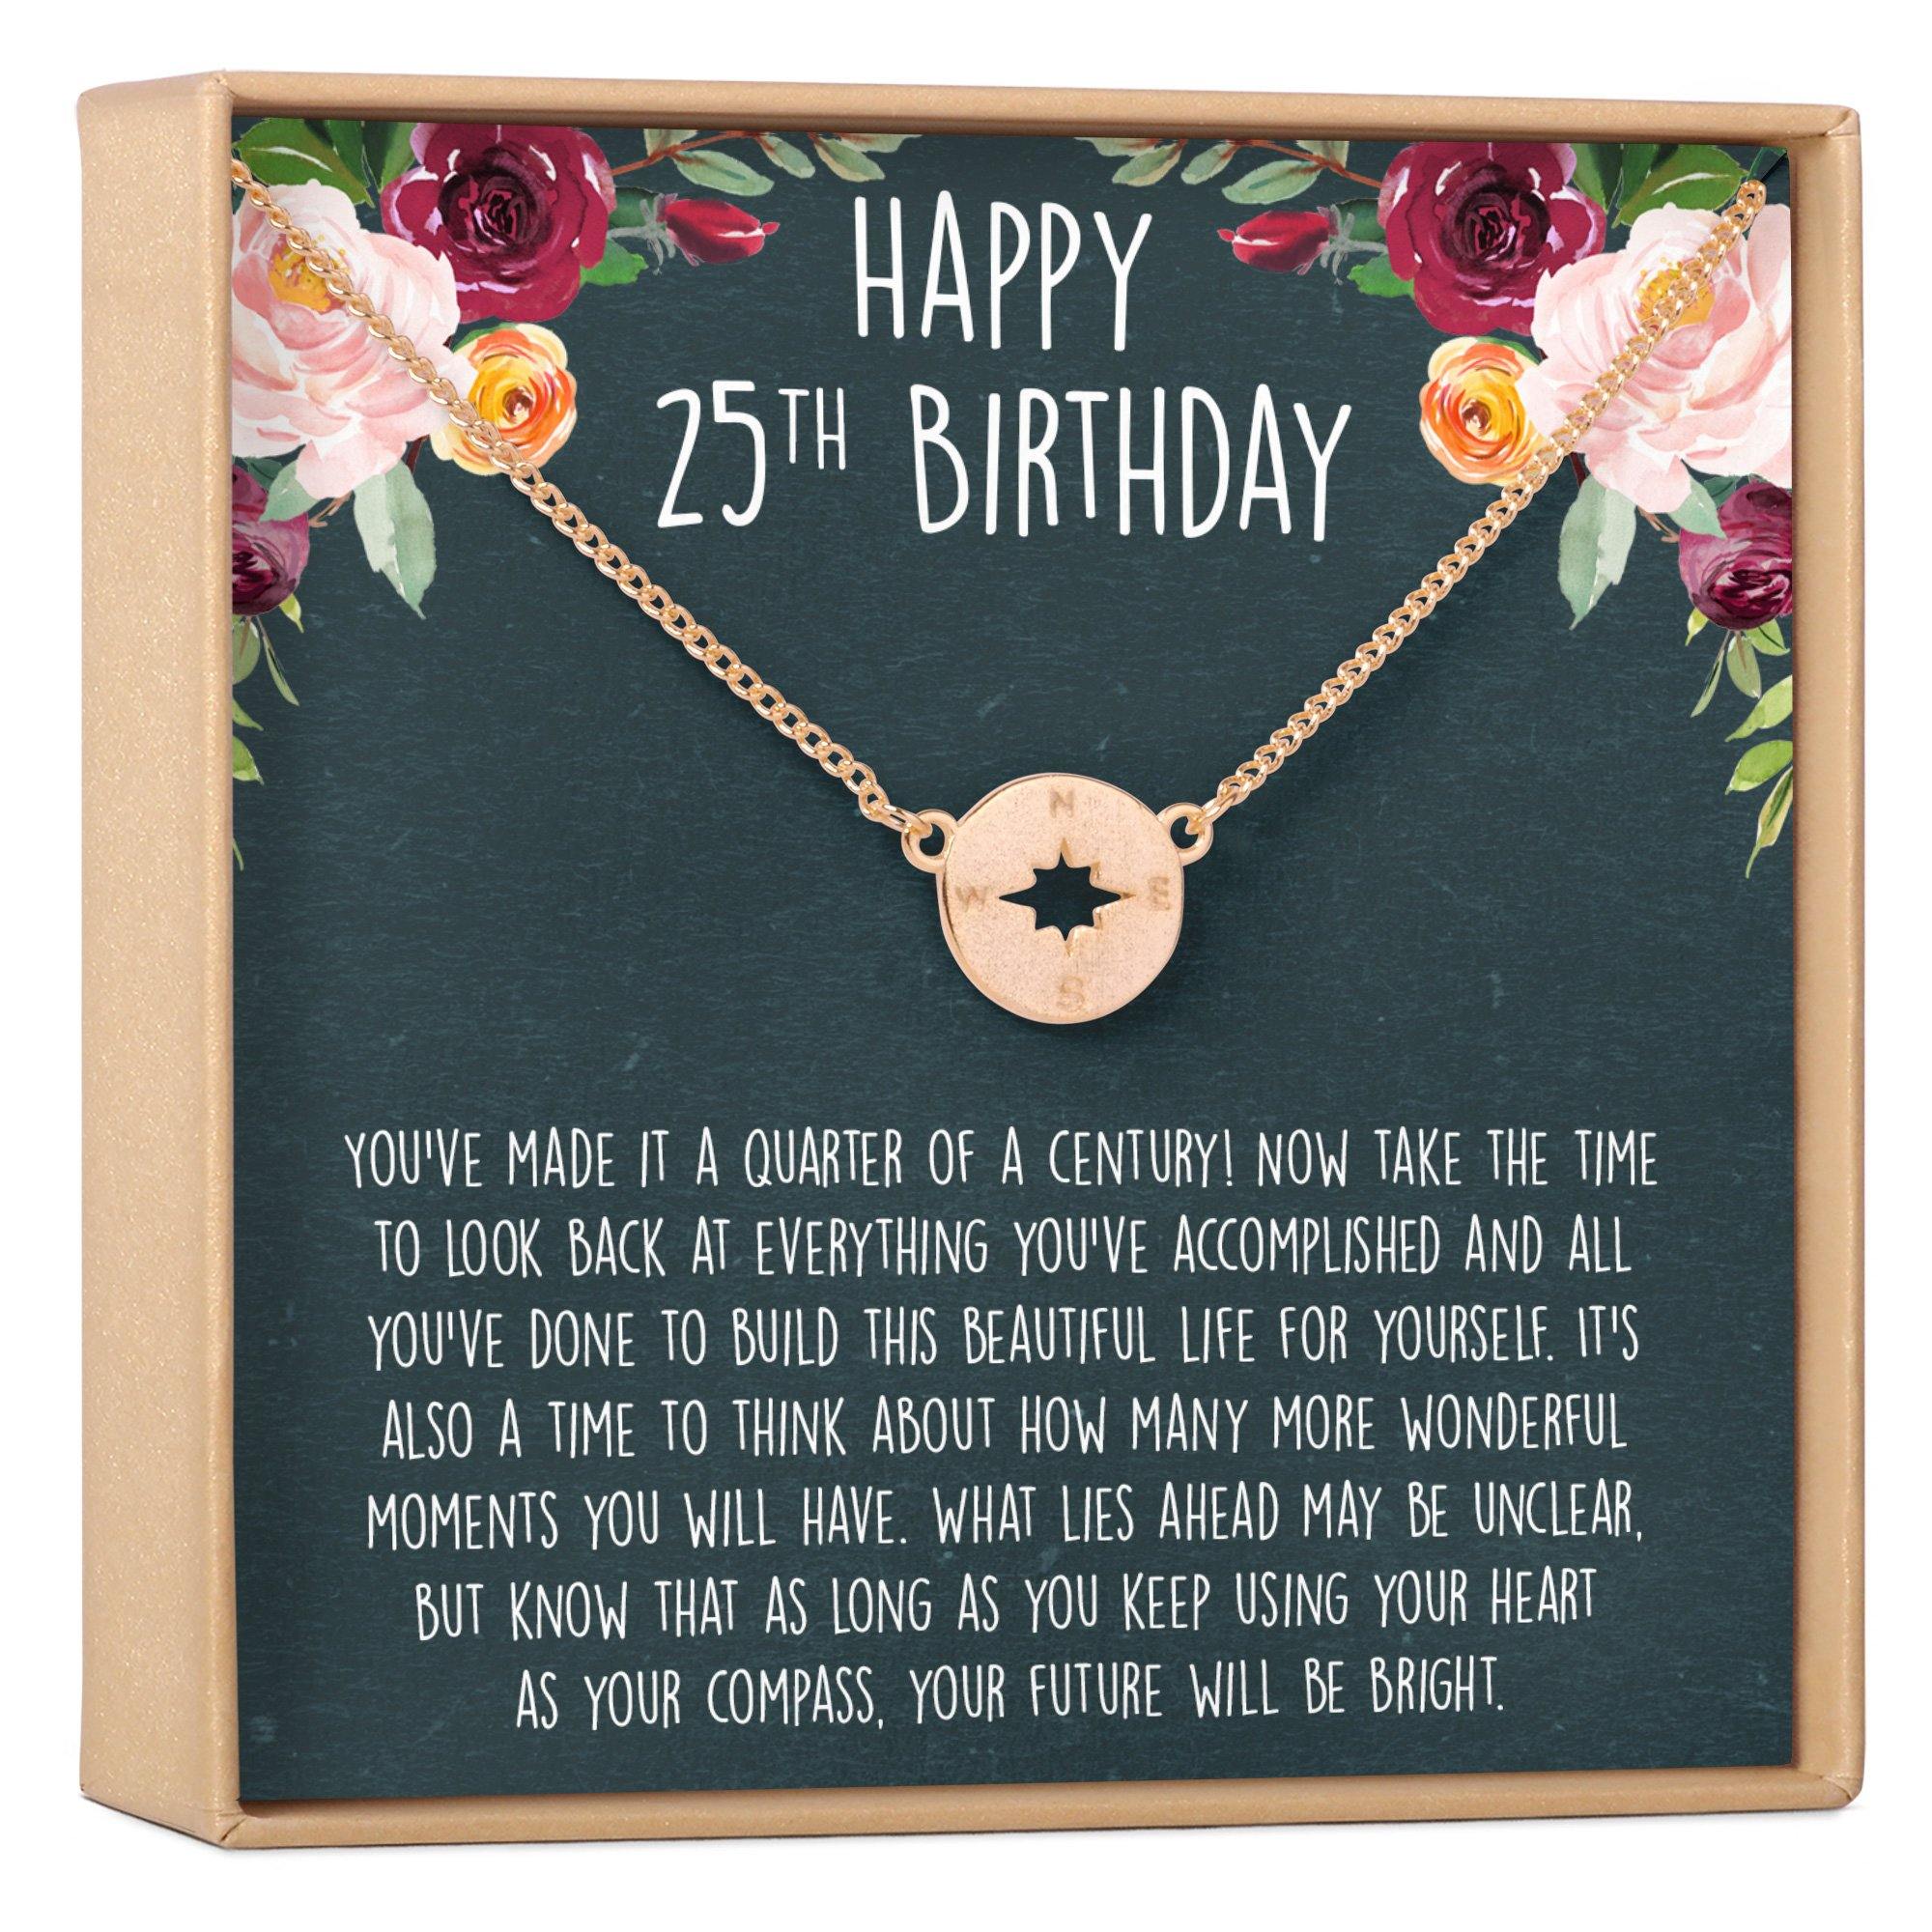 25th birthday message